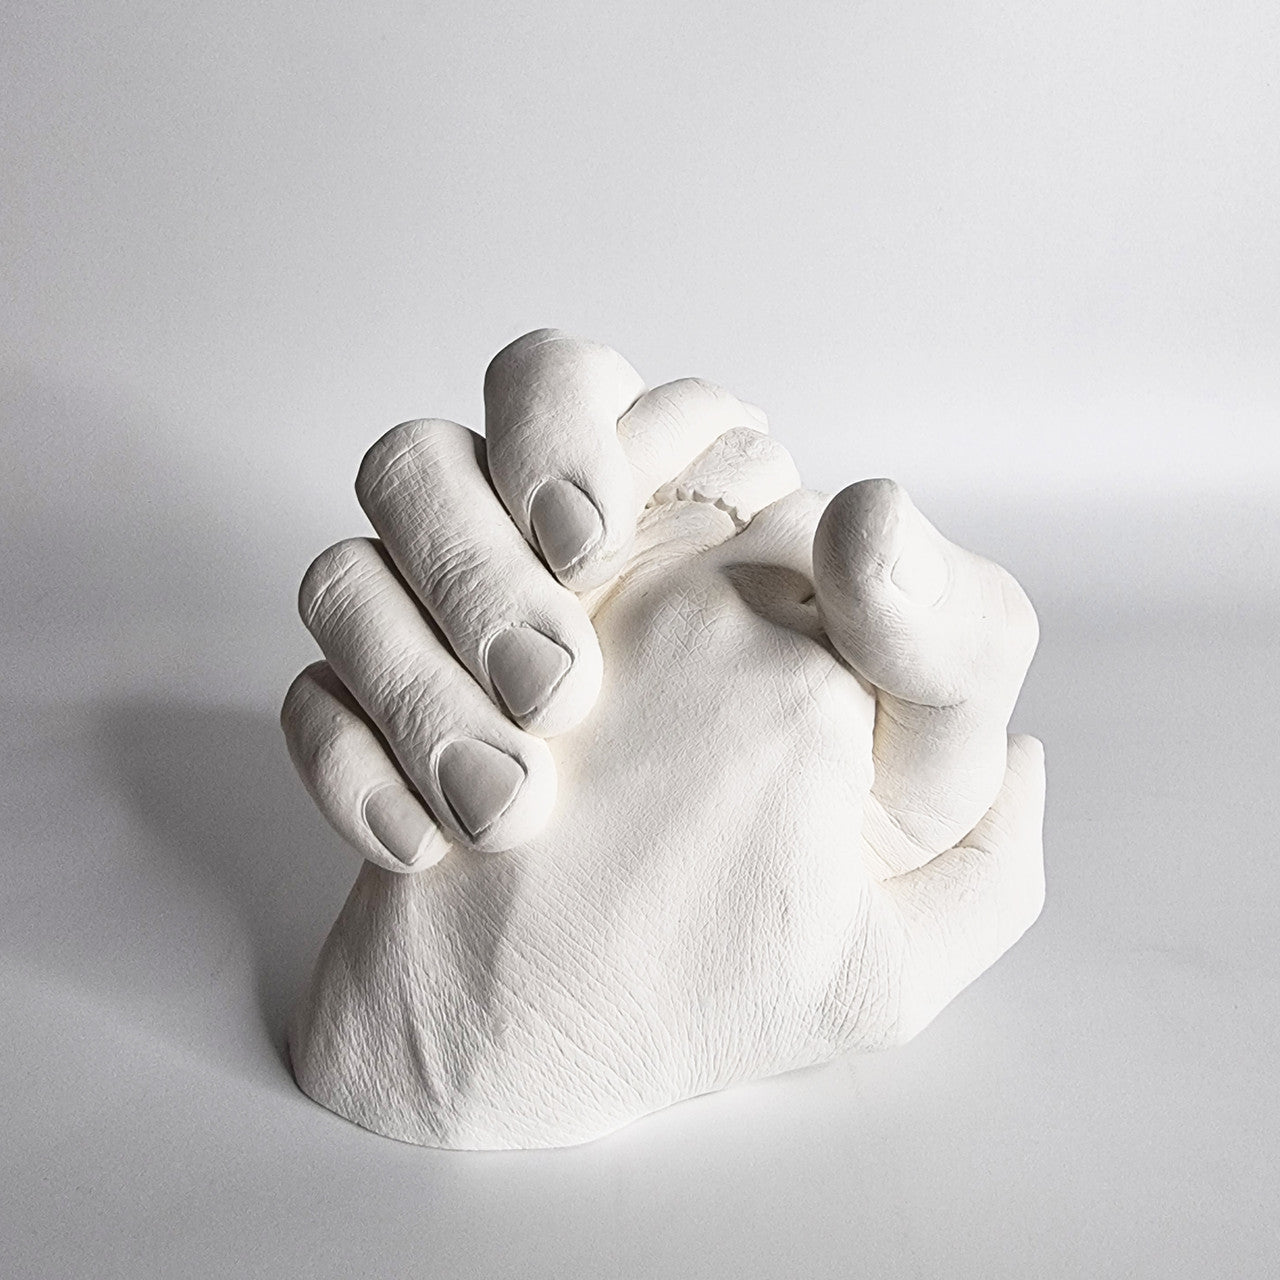 Alginate Molding Powder Refill for Hand Casting Kit - Non-Toxic Casting  Plast